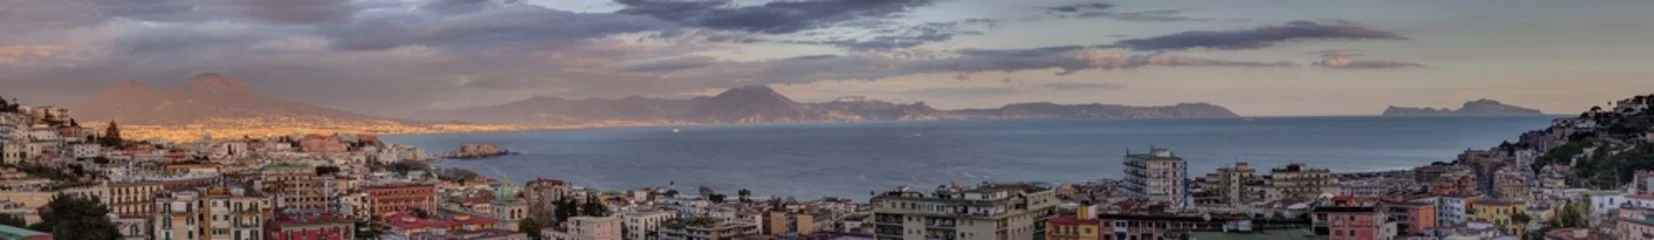 Poster Panorama von Neapel © nikla